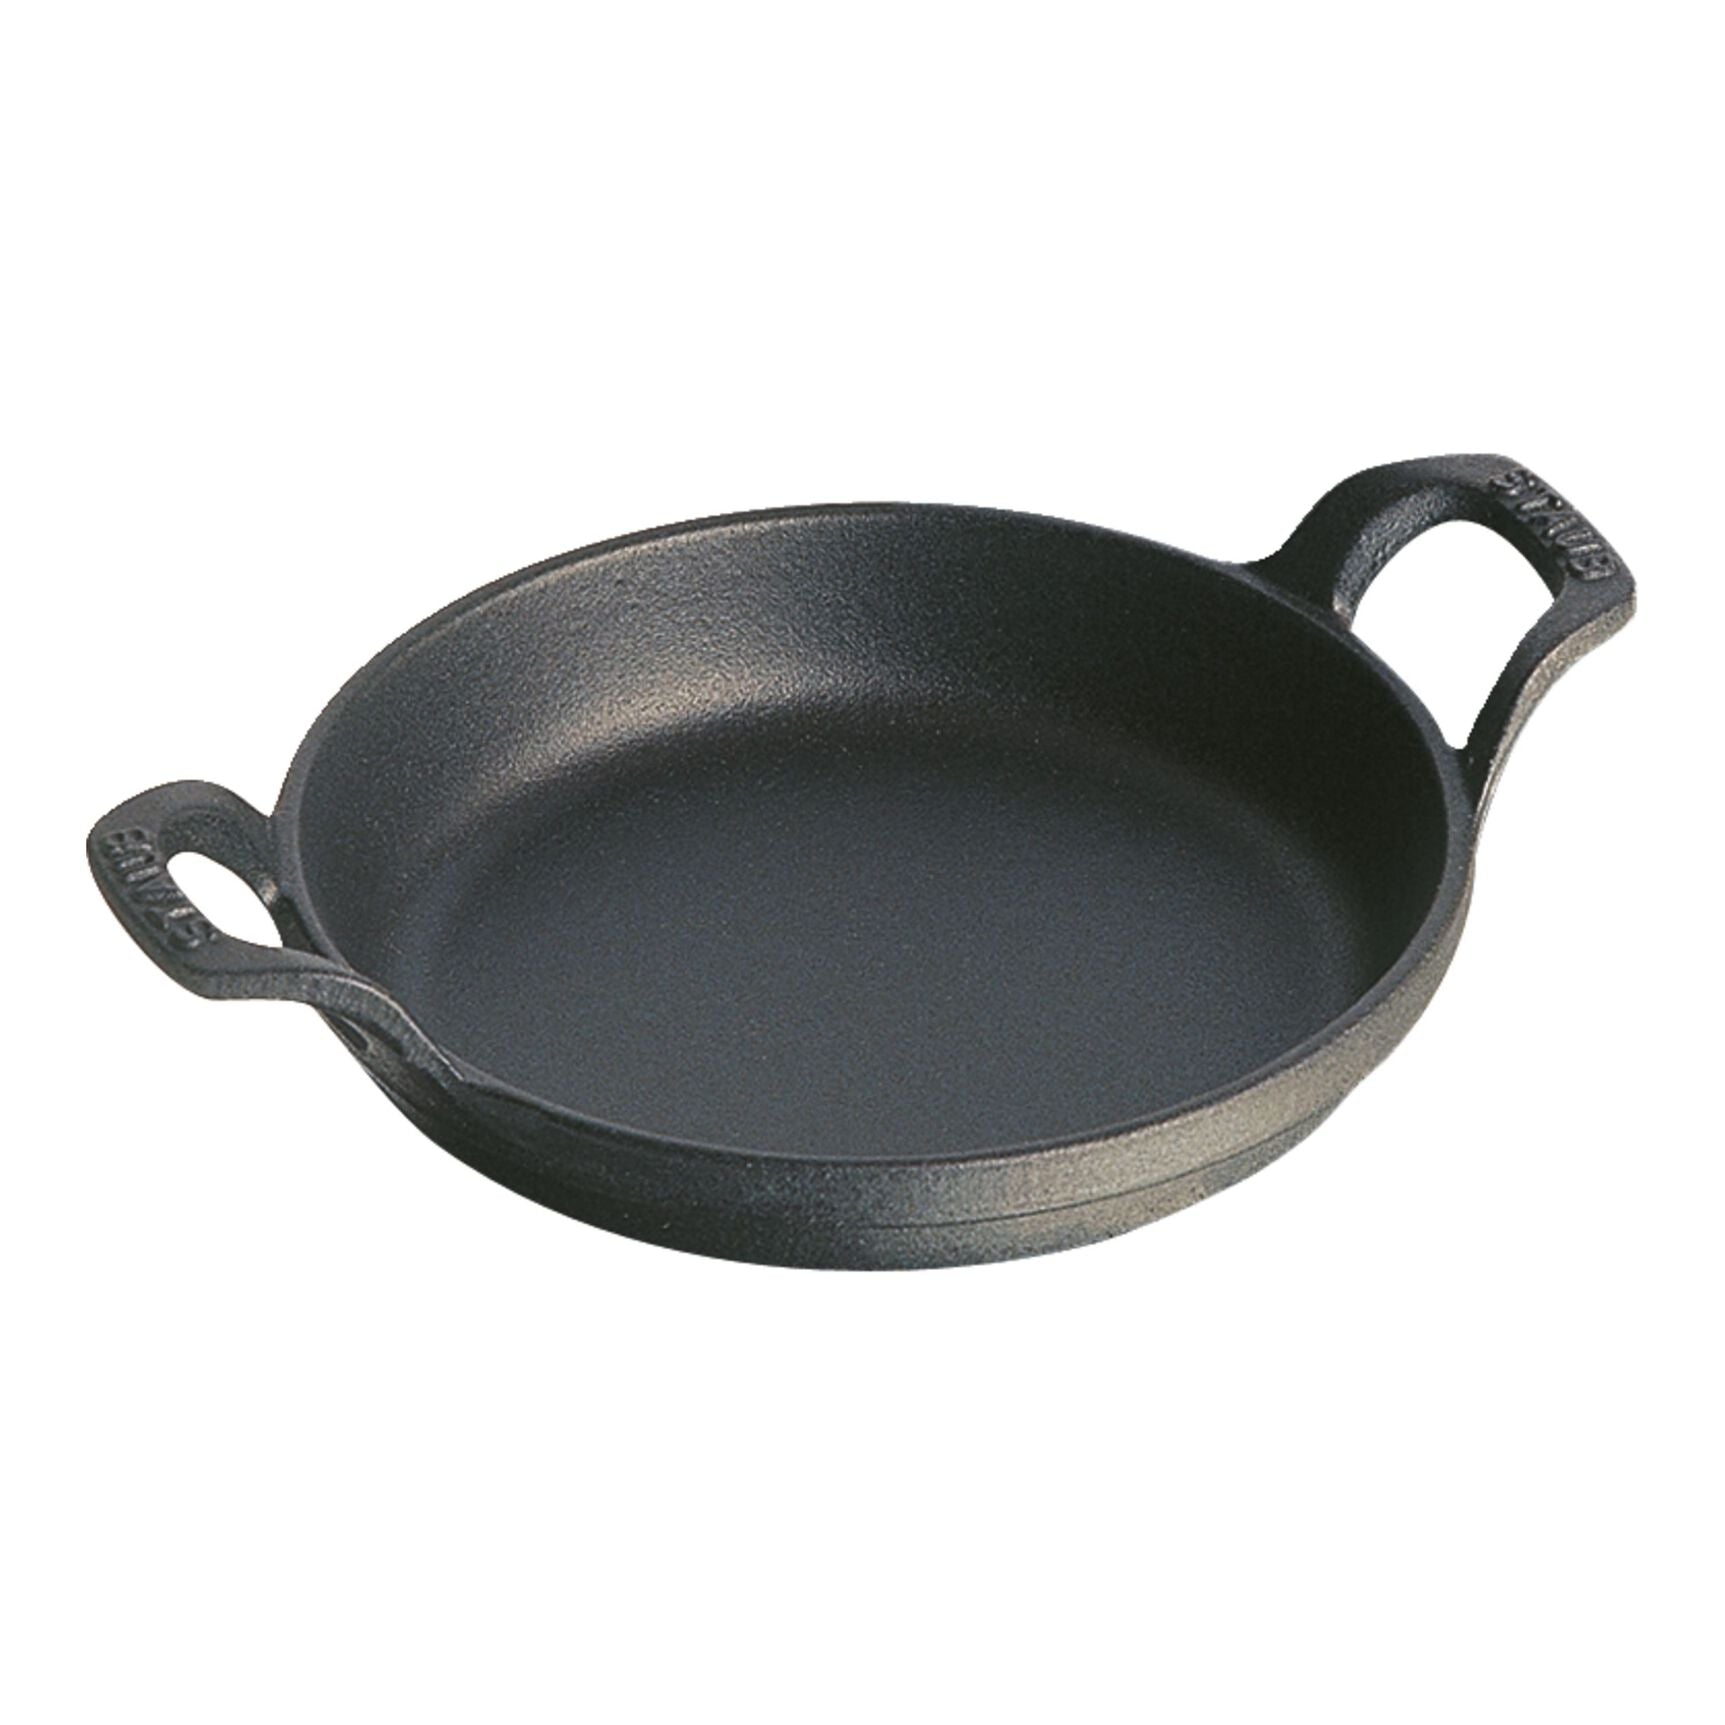 Baking dish Staub Mini round 12 cm, Black 40509-472-0